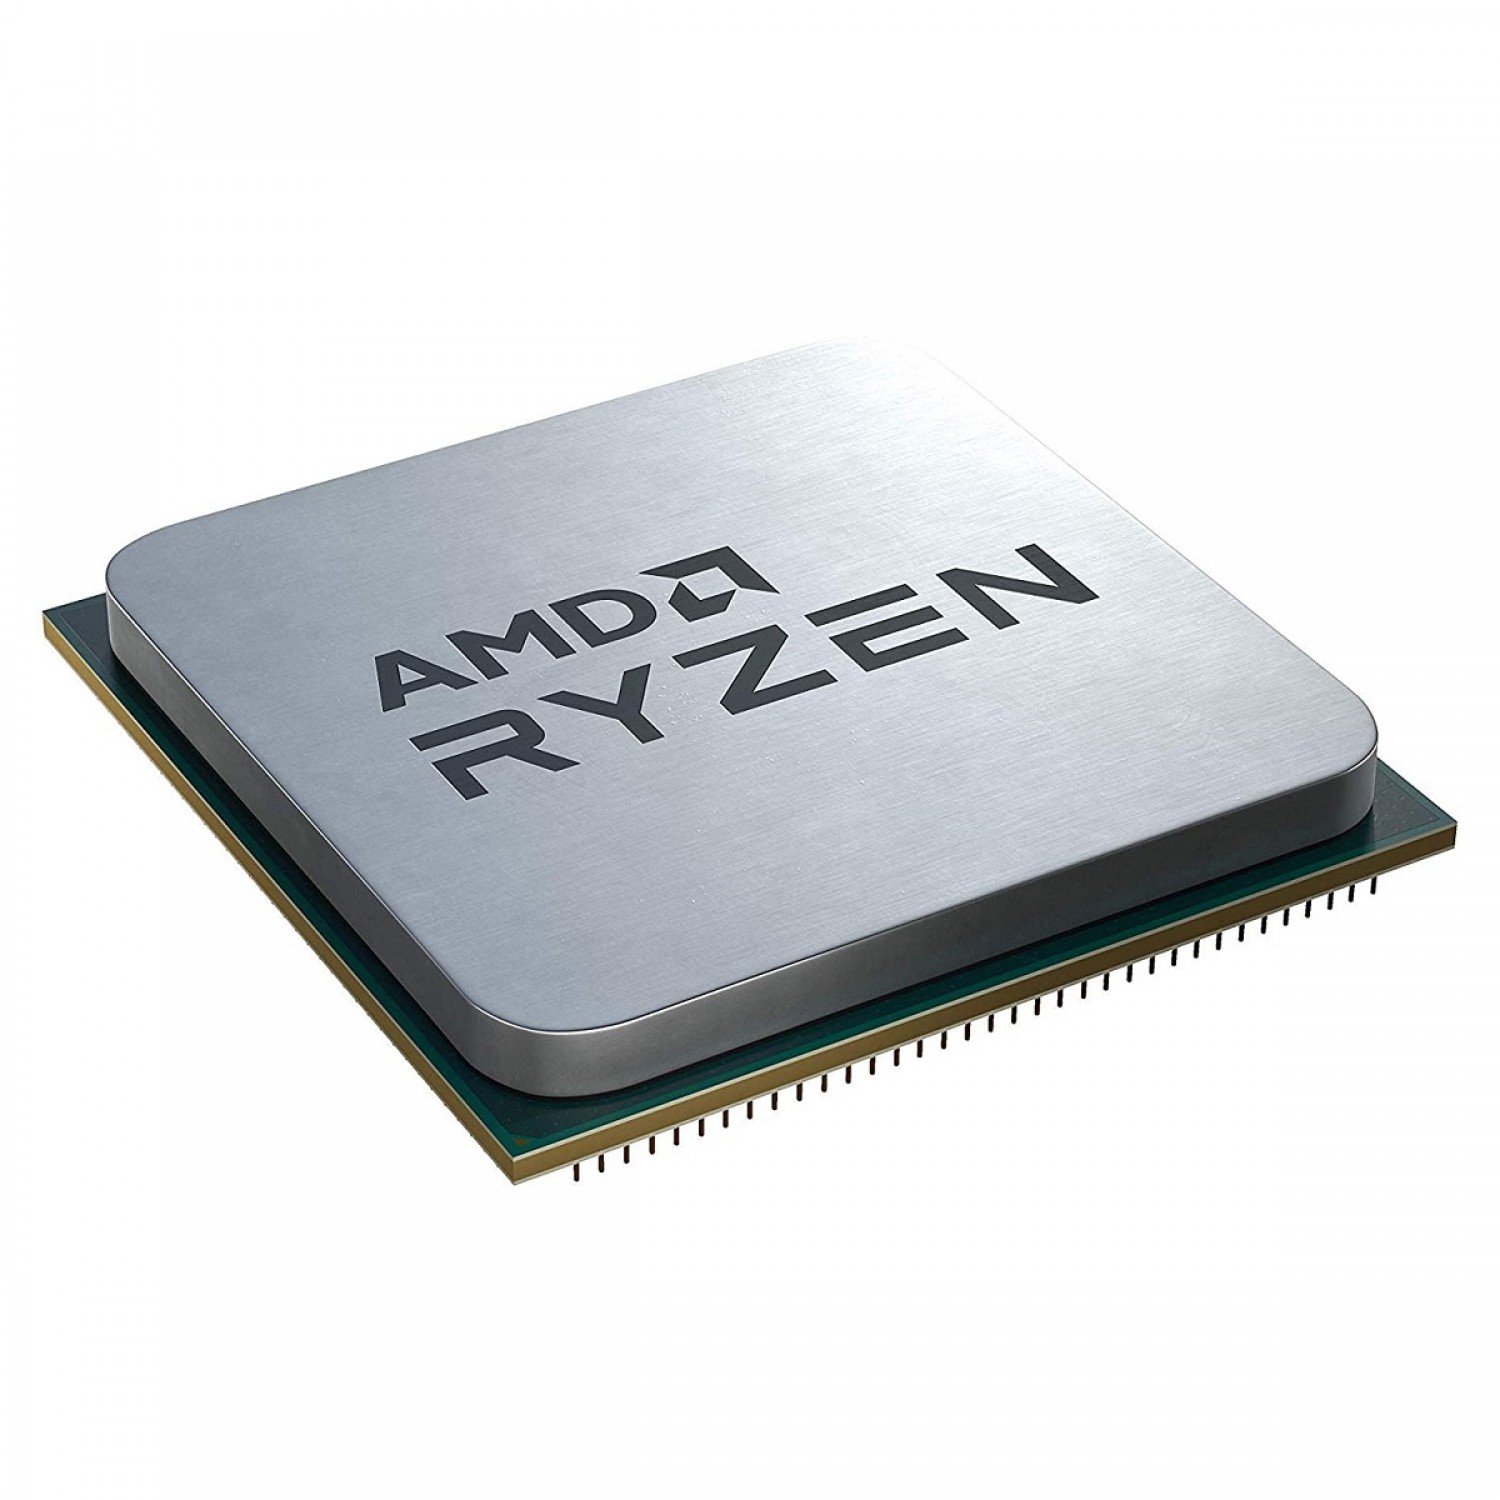 پردازنده AMD Ryzen 3 3100-3